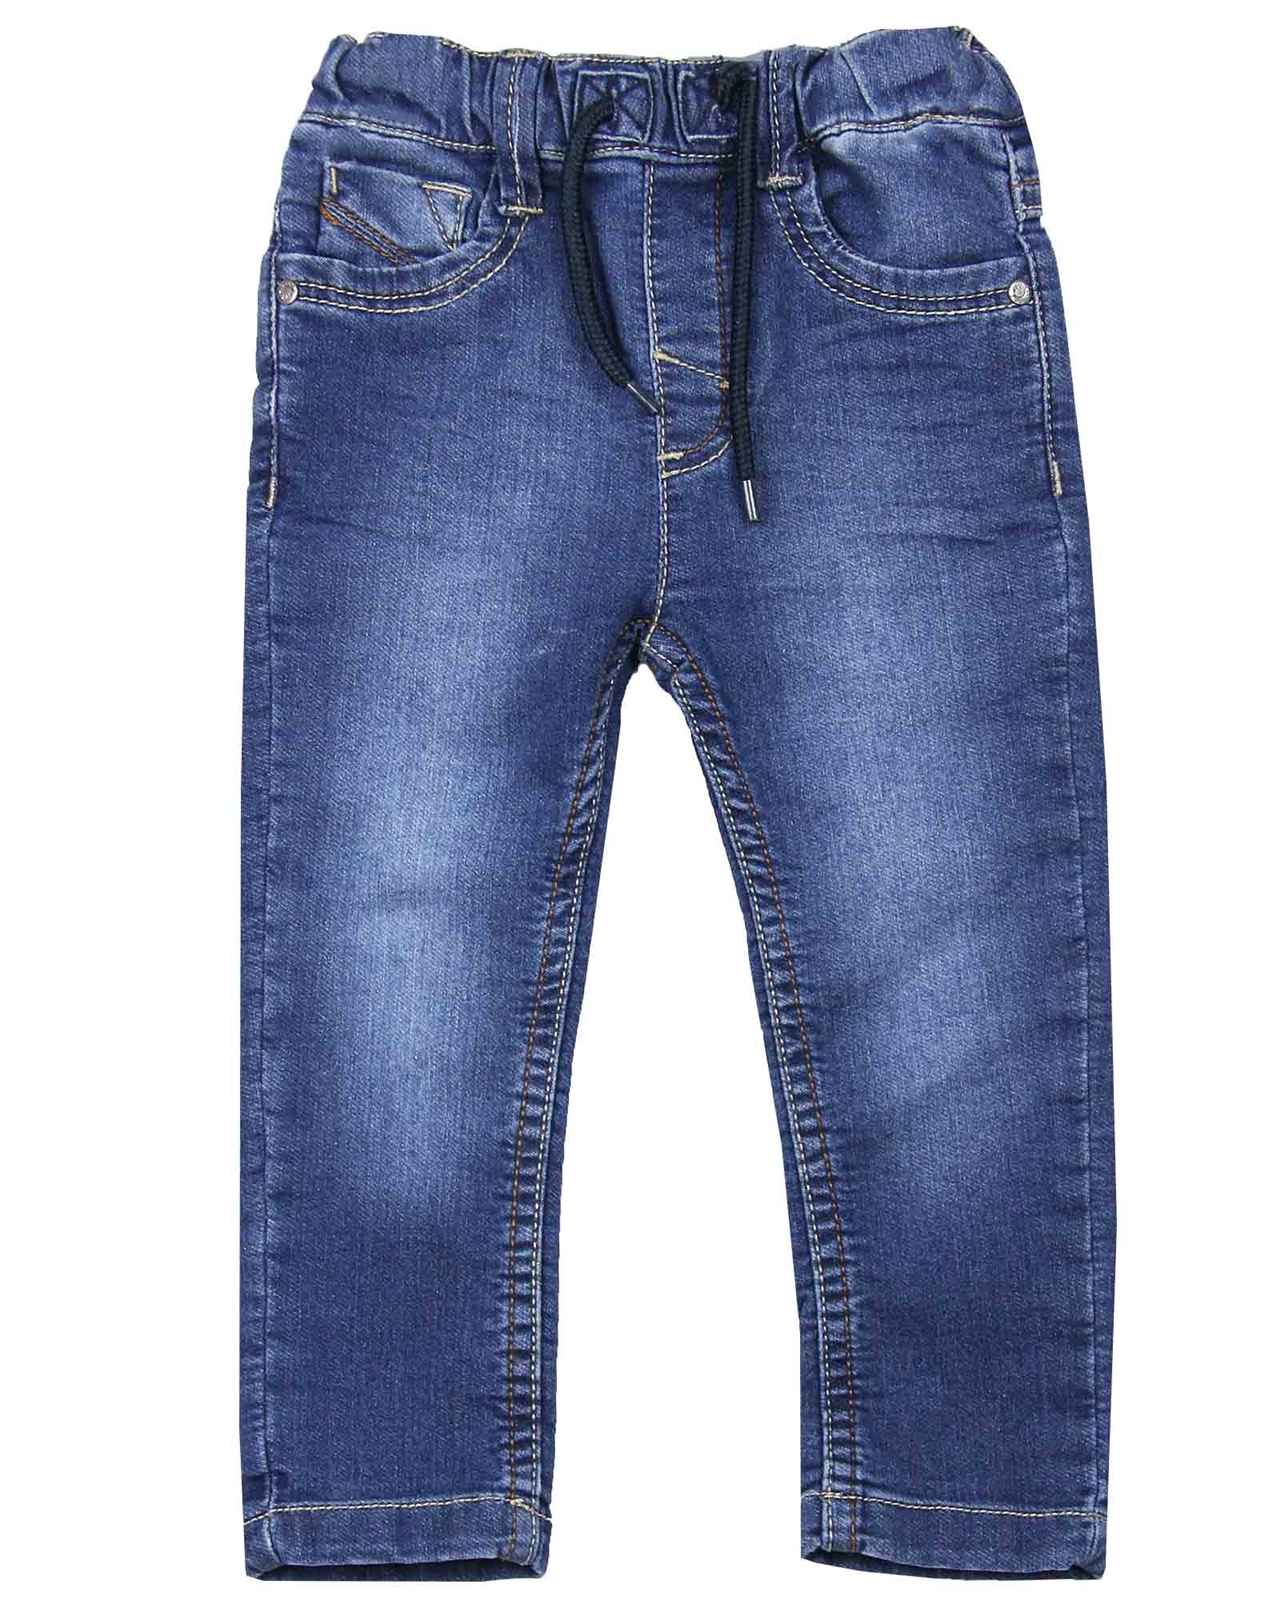 Losan Boys Basic Jogg Jeans in Medium Blue - Losan - Losan Spring ...